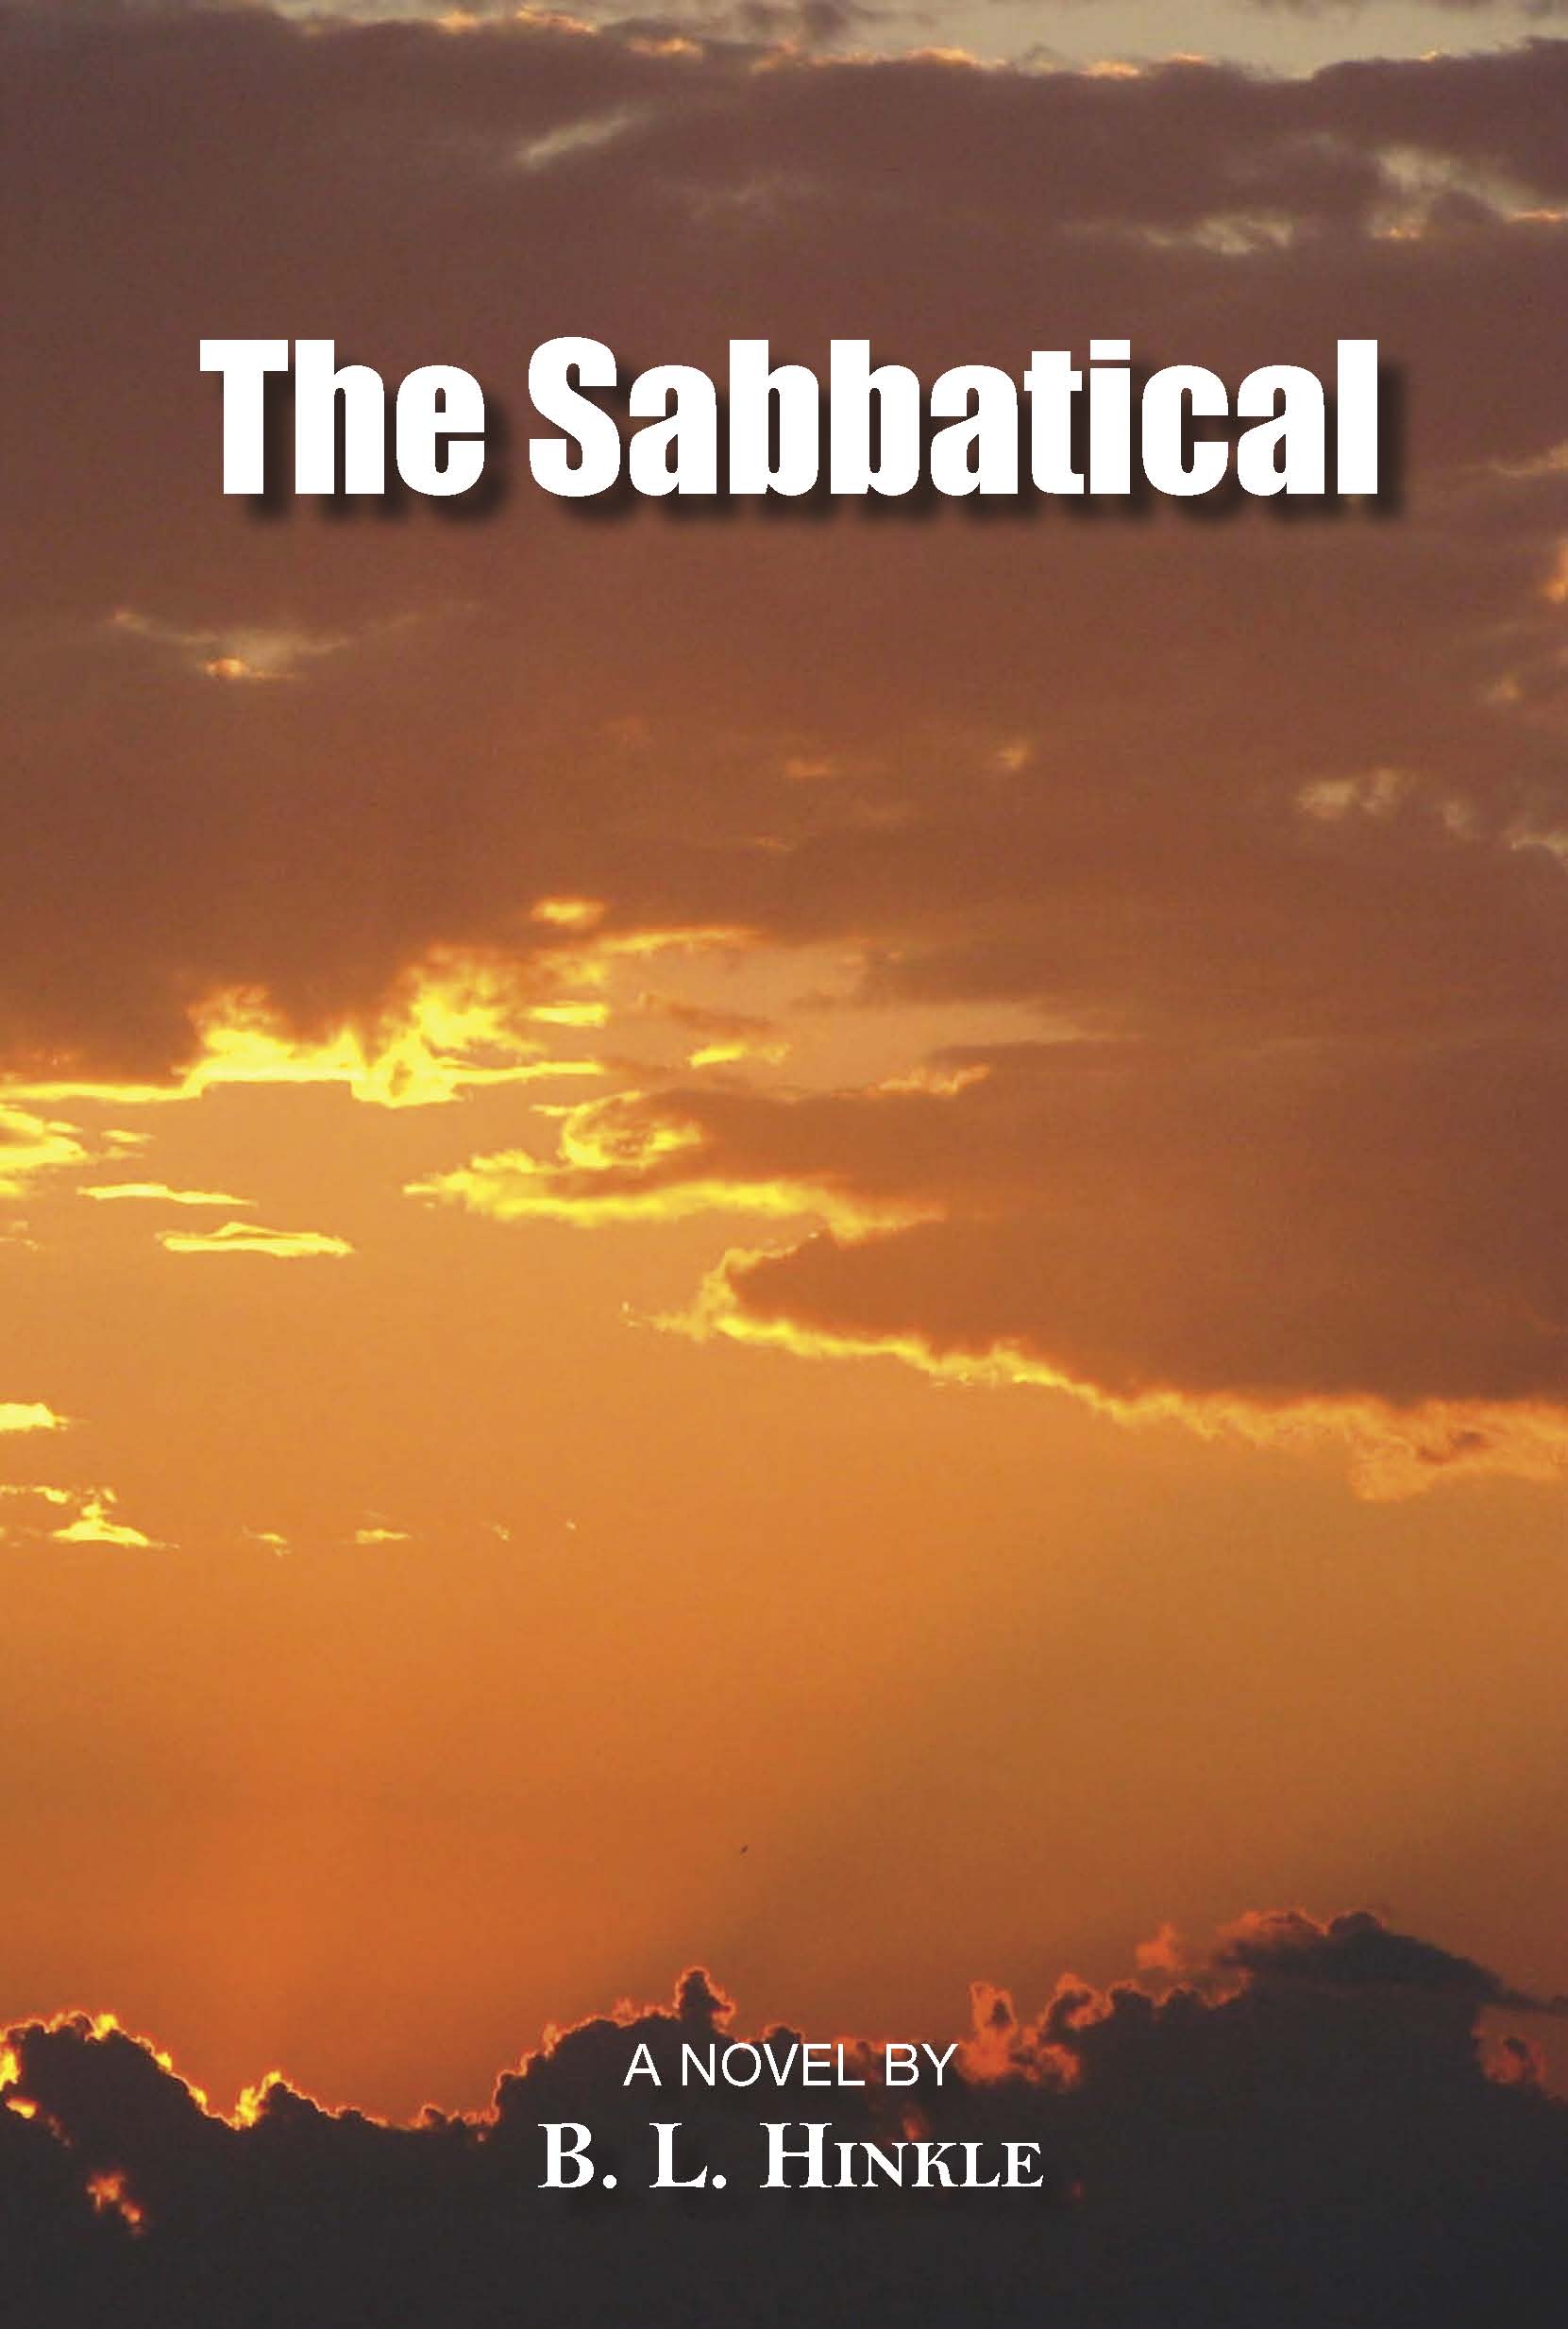 The Sabbatical, a novel by B. I. (Bob) Hinkle